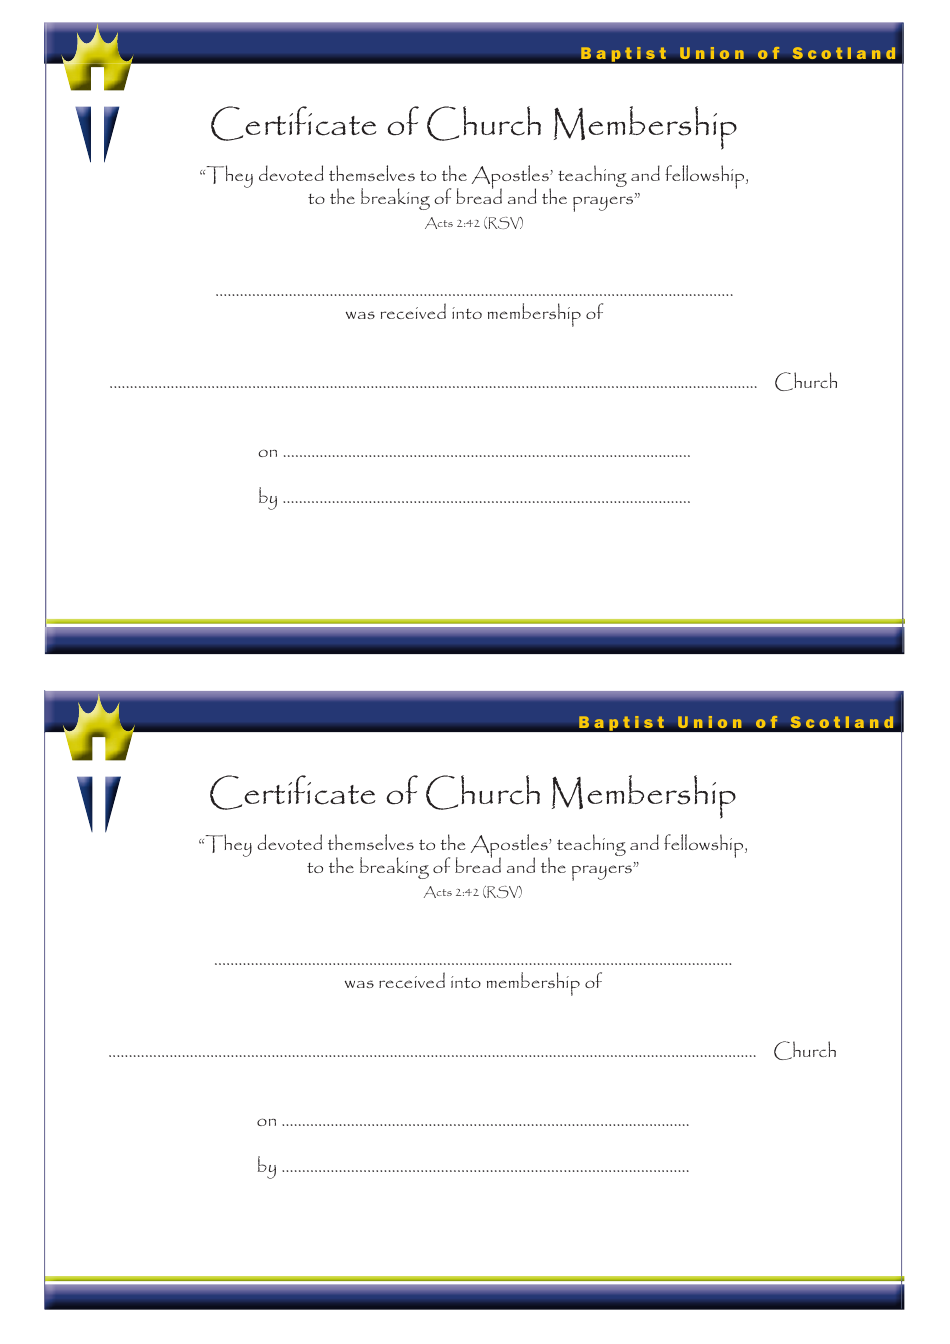 Certificate of Church Membership Templates Baptist Union of Scotland